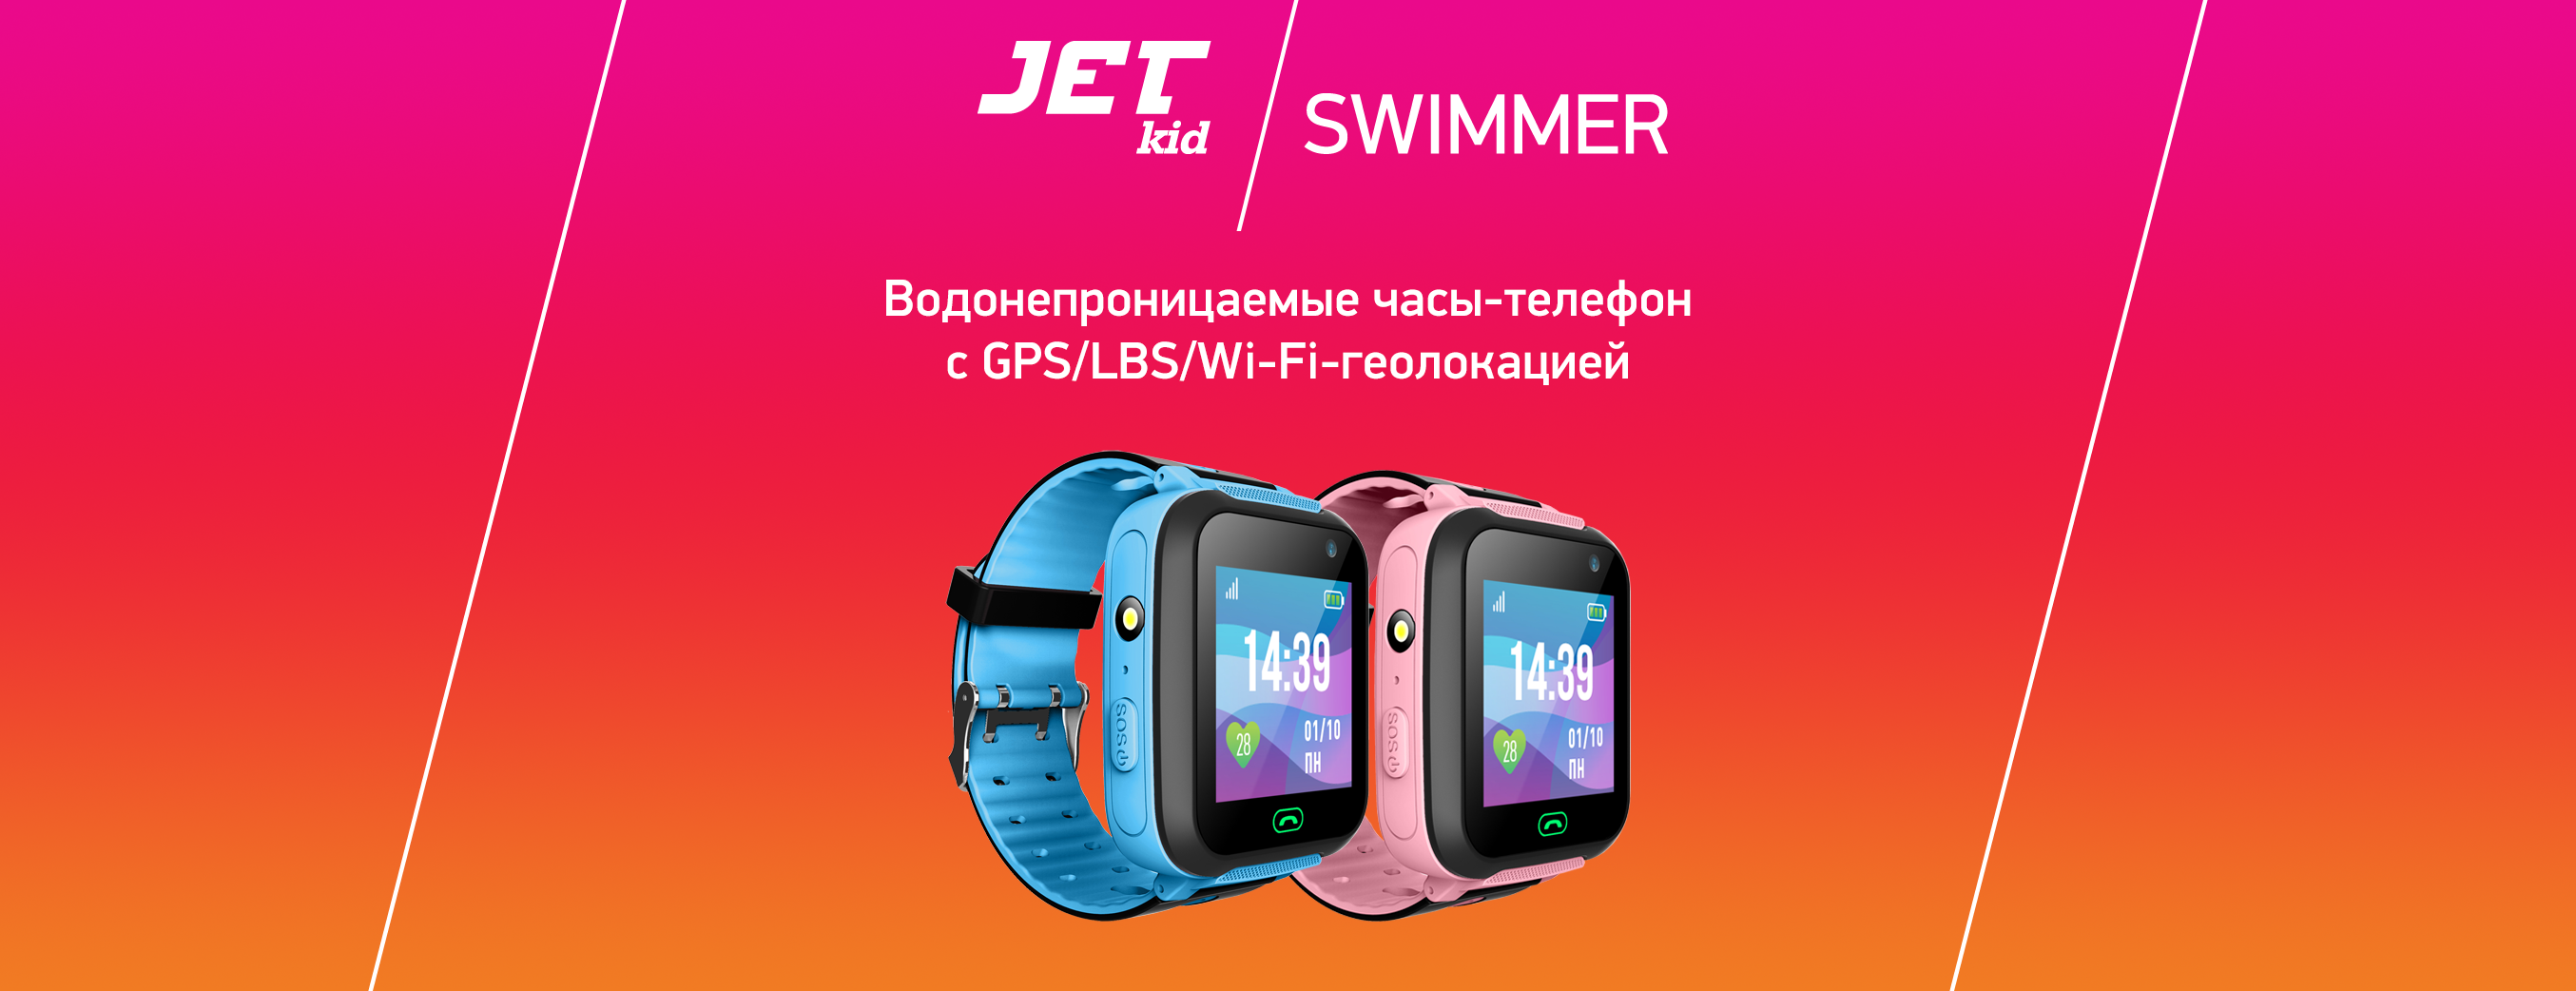 Jet_Kid_Swimmer_модели